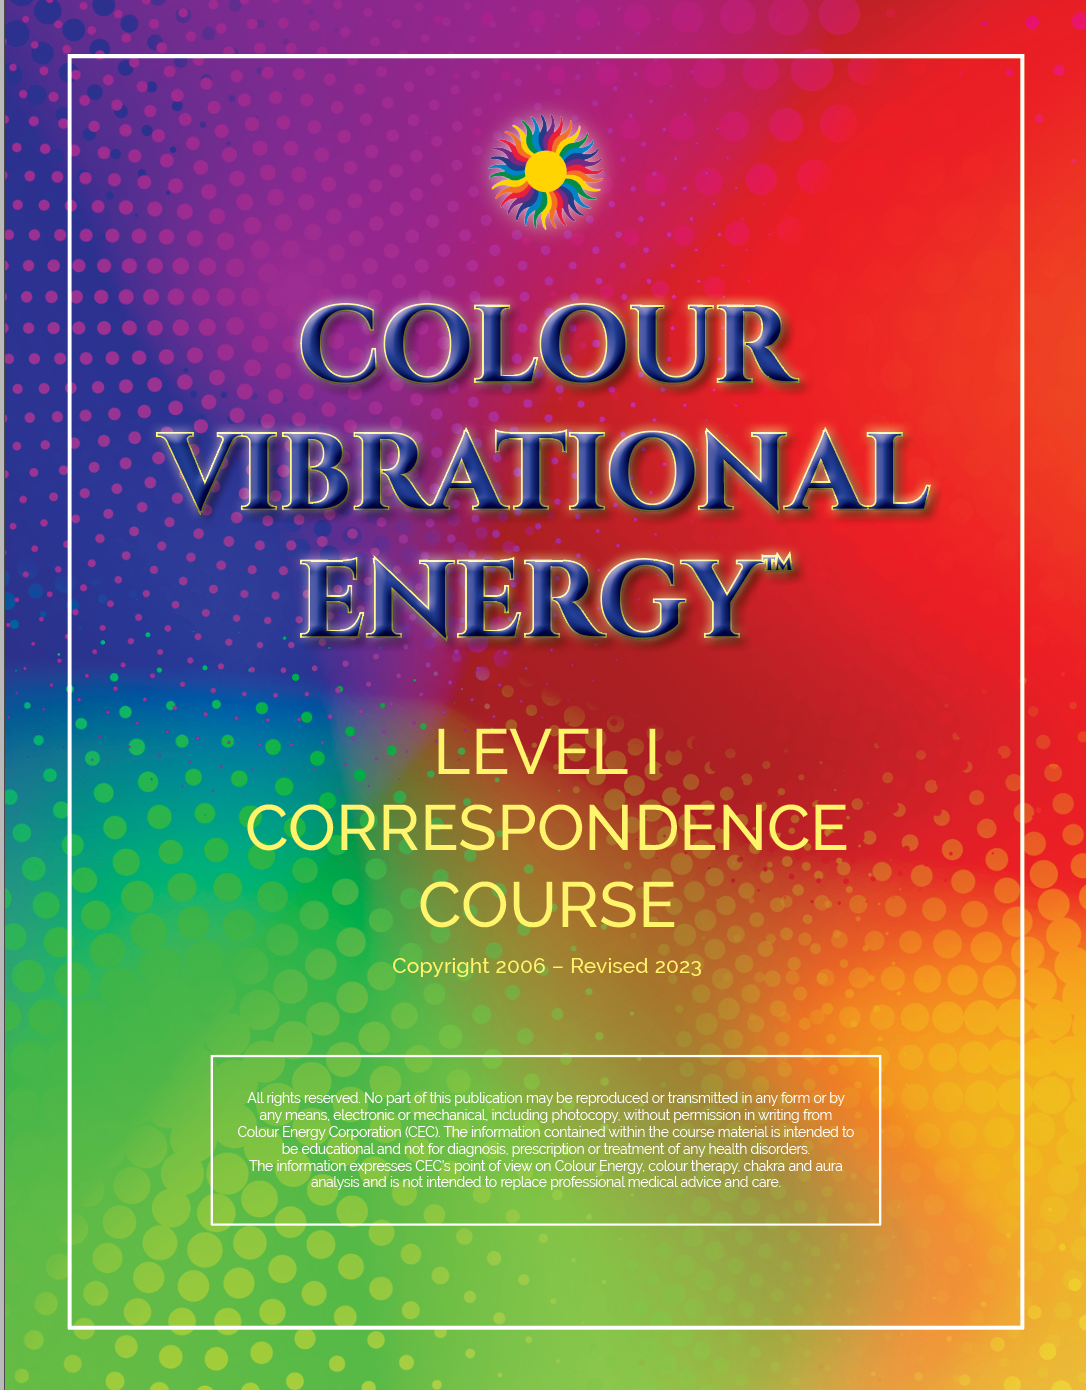 Colour Vibrational Energy™ Master (CVEM) Program &amp; Correspondence Courses